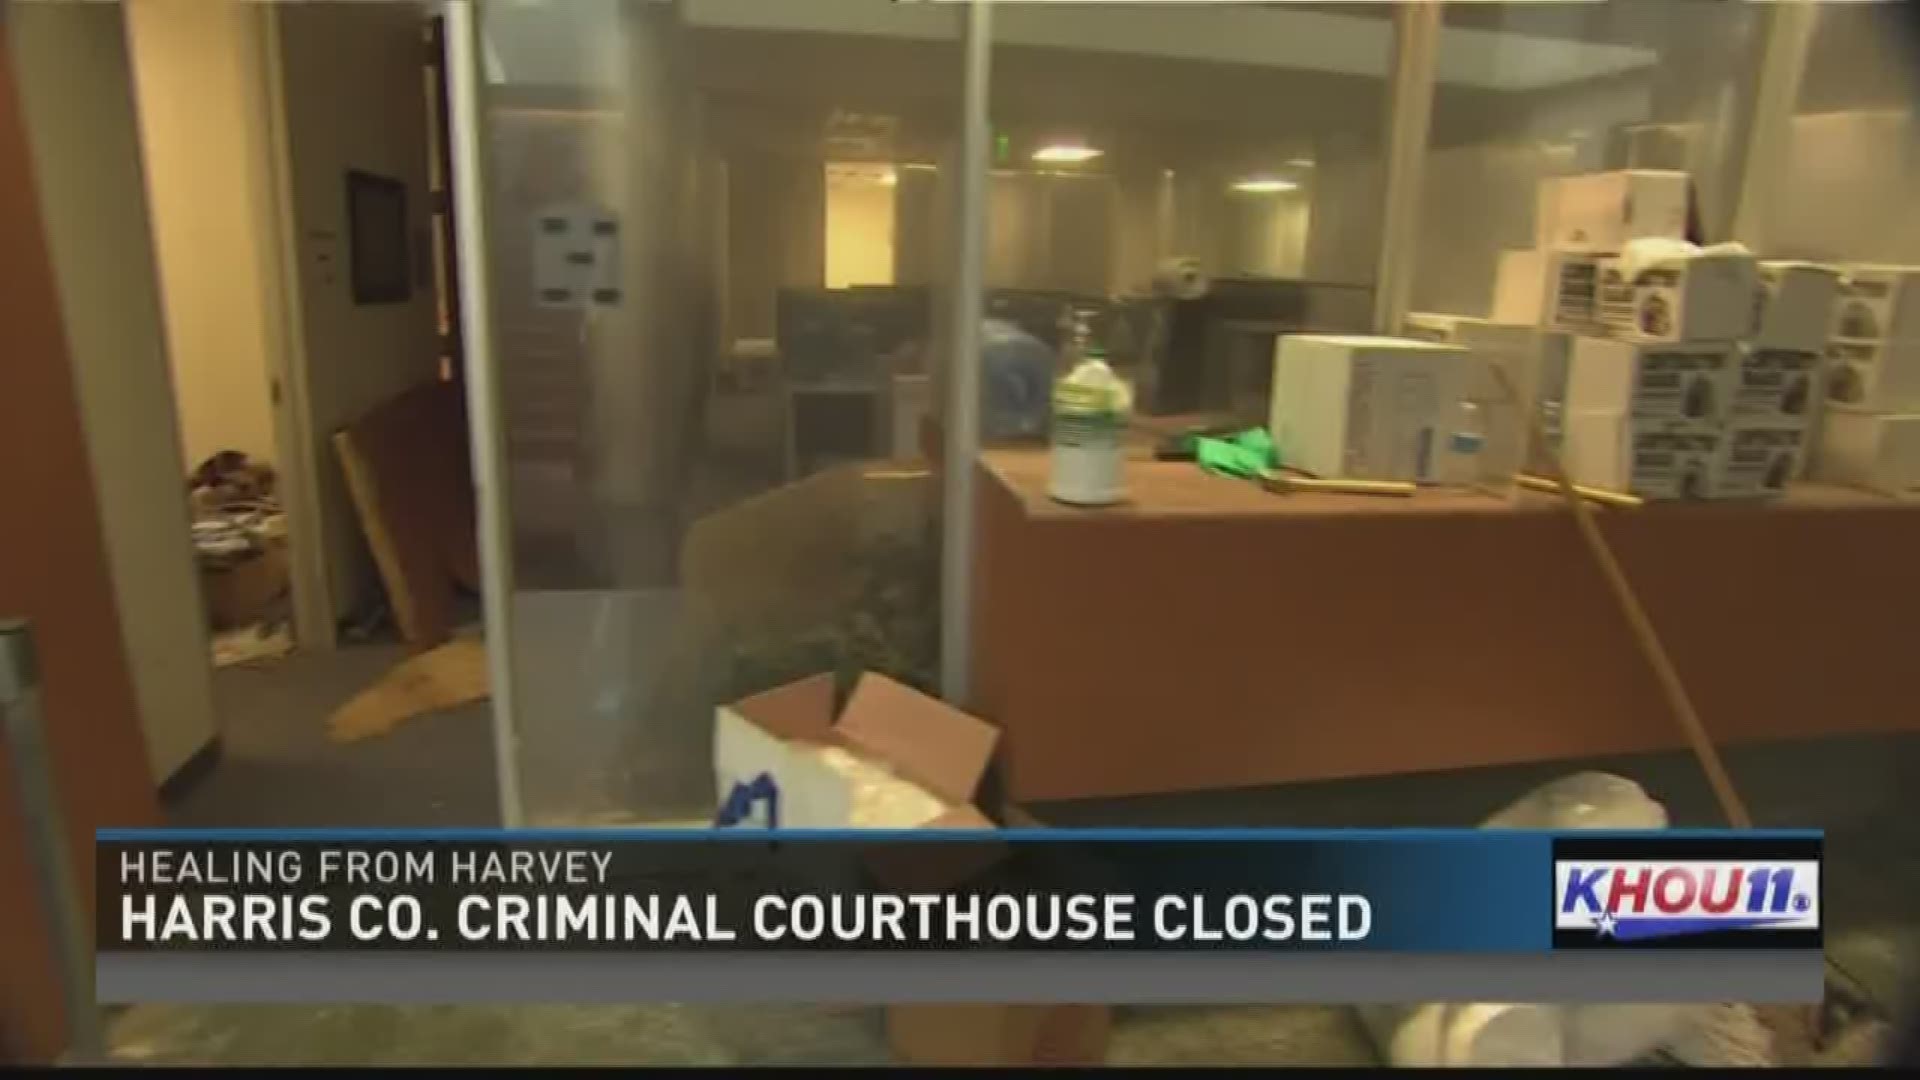 Hurricane Harvey dealt a big blow to the Harris Co. Criminal Courthouse.